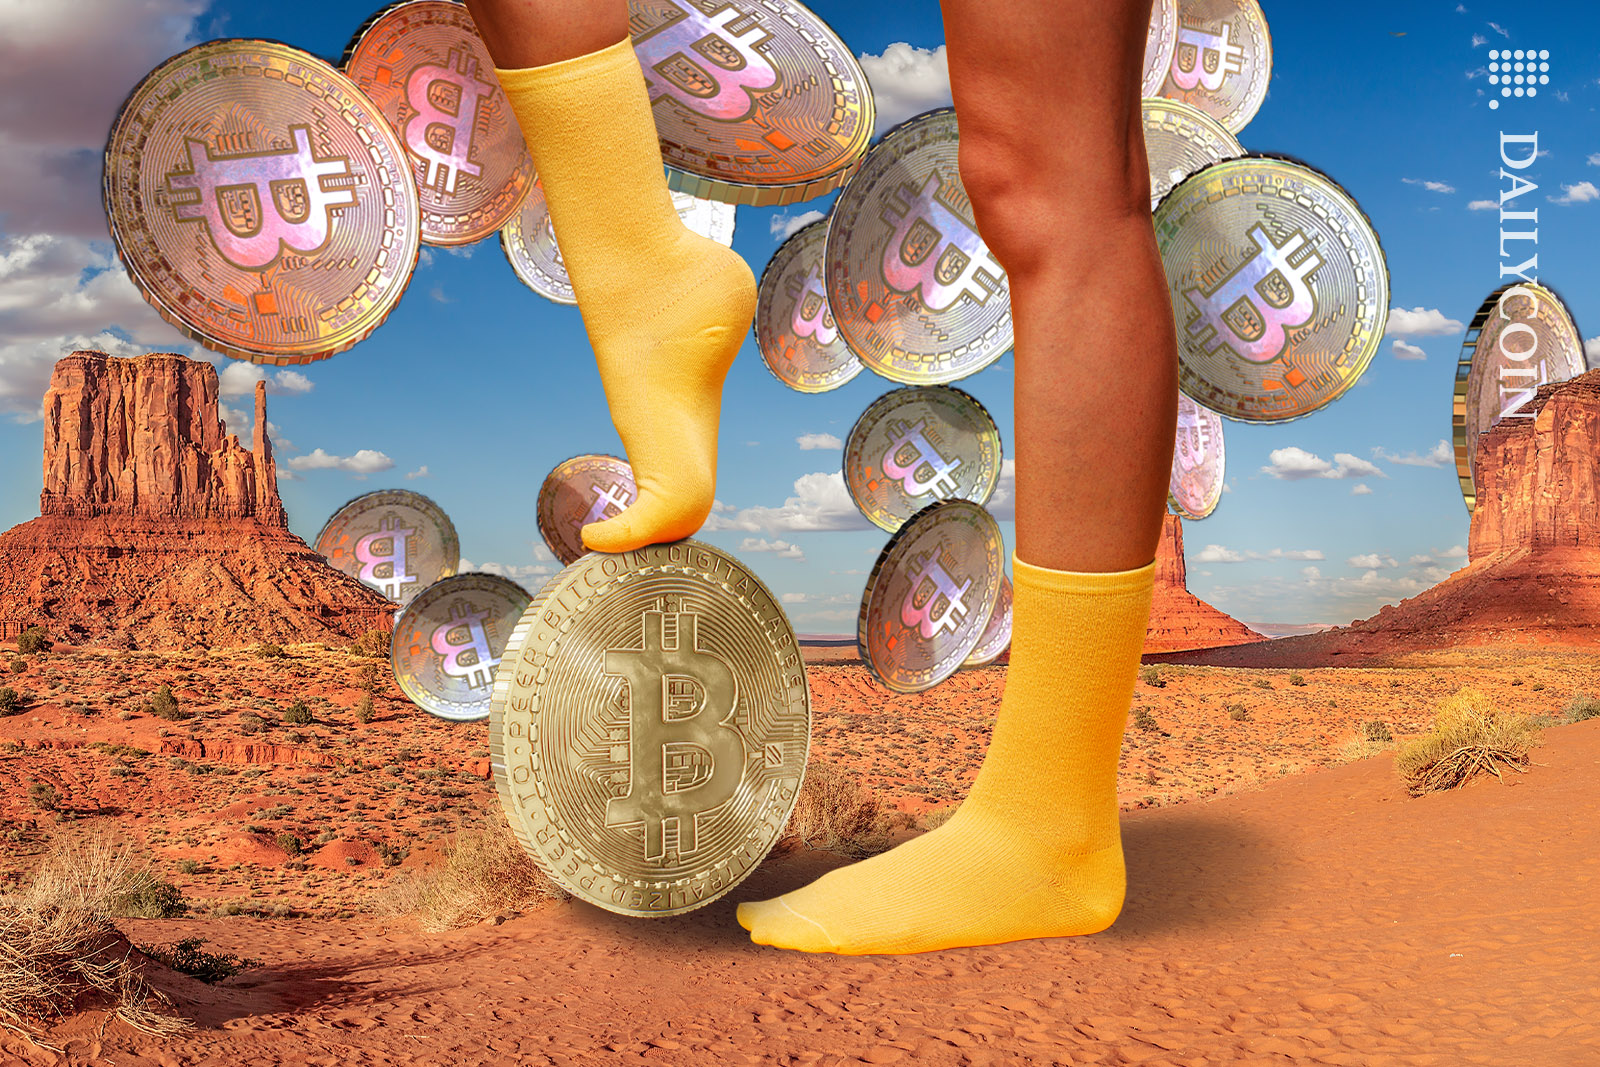 Putting a foot down on a Bitcoin in Arizona USA.